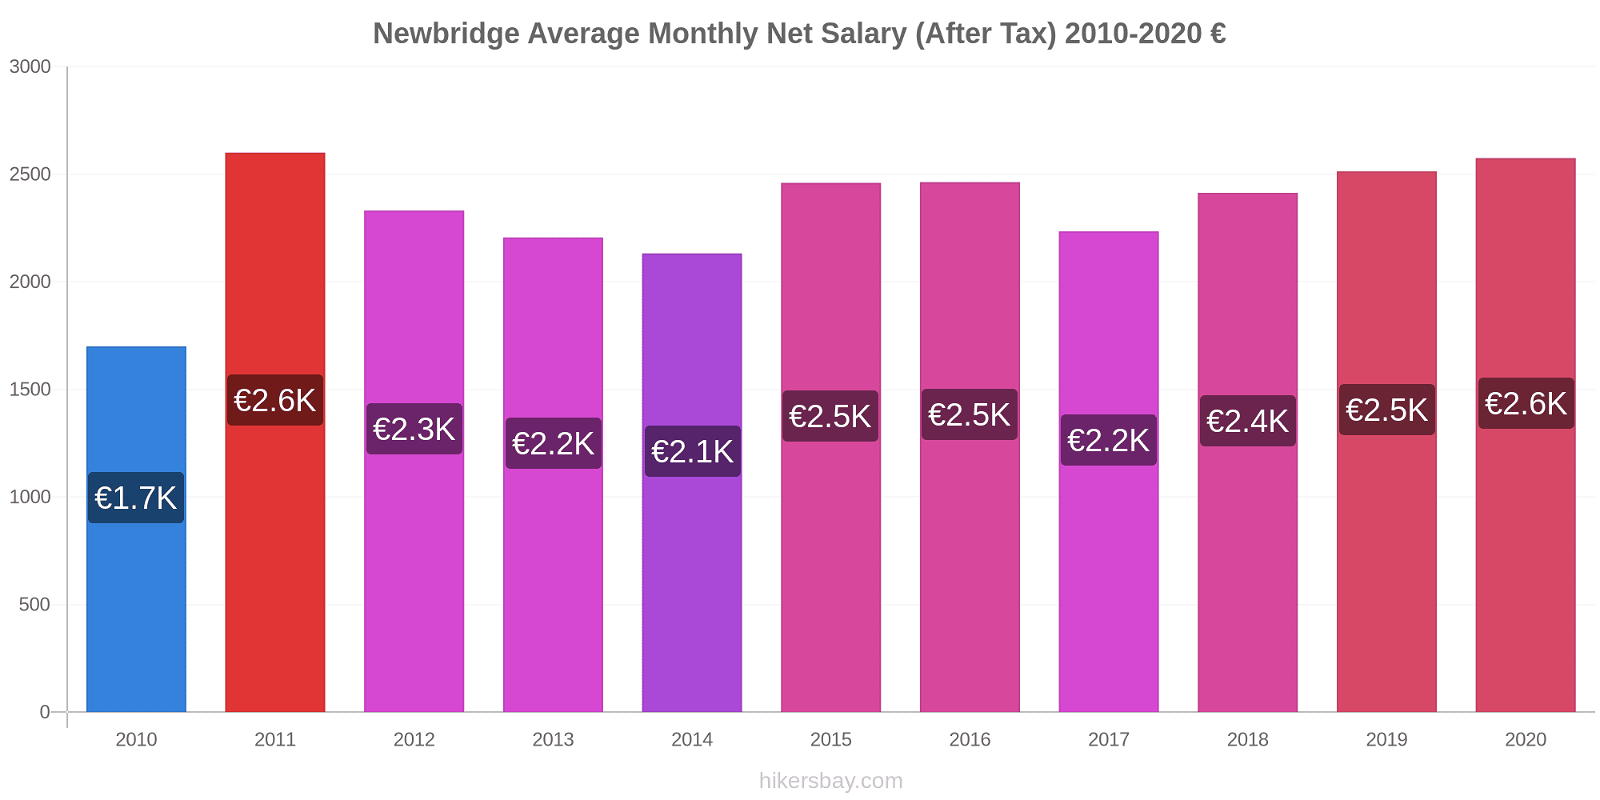 Newbridge price changes Average Monthly Net Salary (After Tax) hikersbay.com